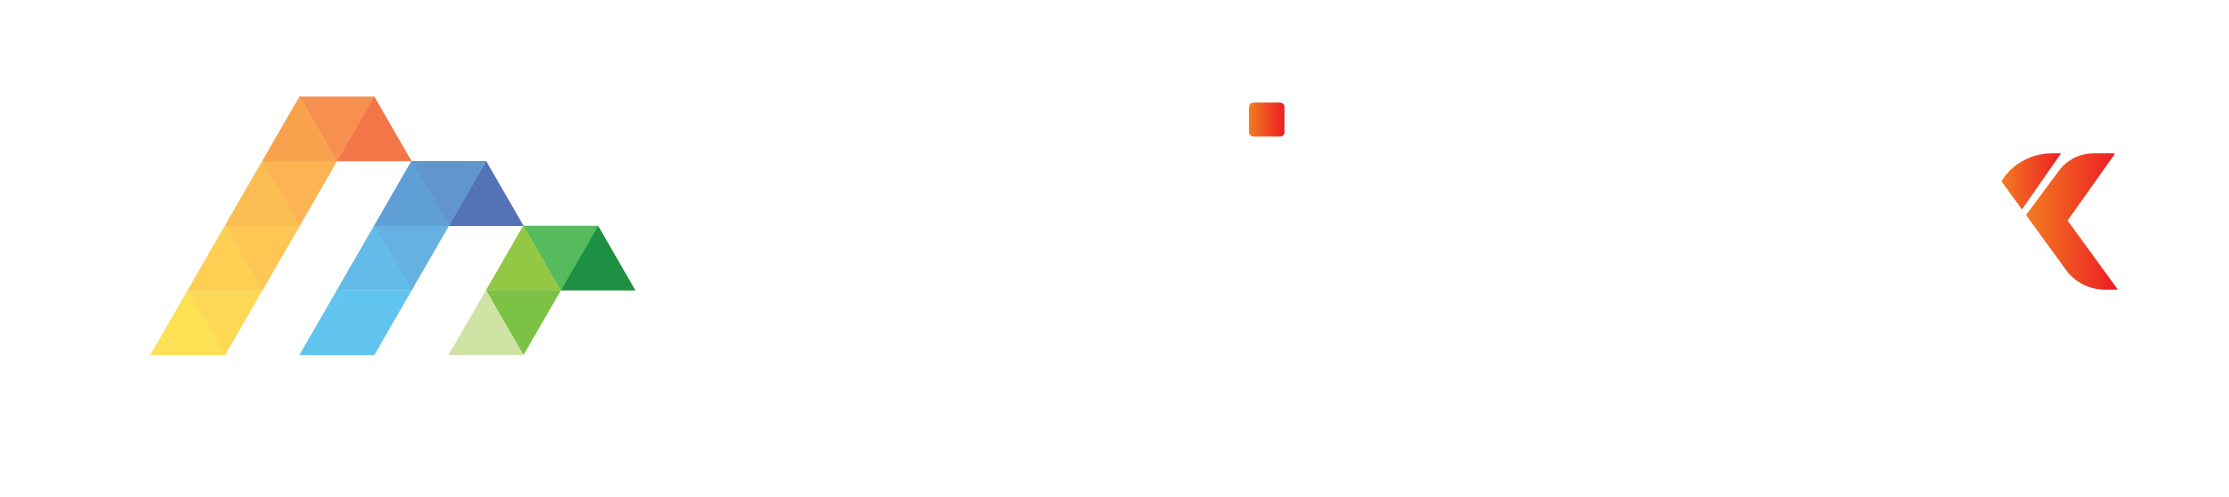 mediamax network logo